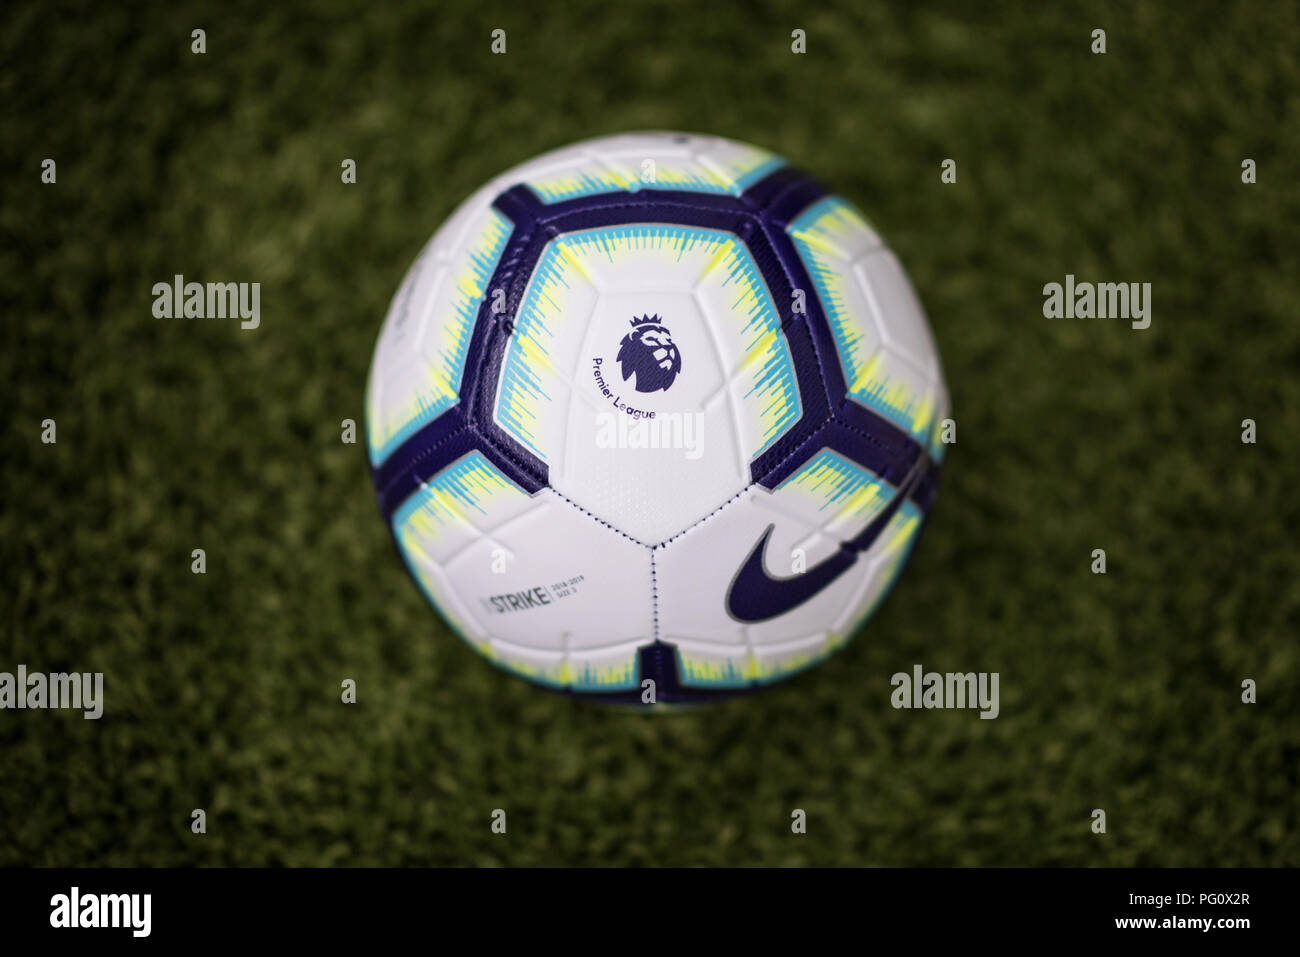 Merlin Nike pelota para la temporada 2018/19 de la Premier League. Foto de stock